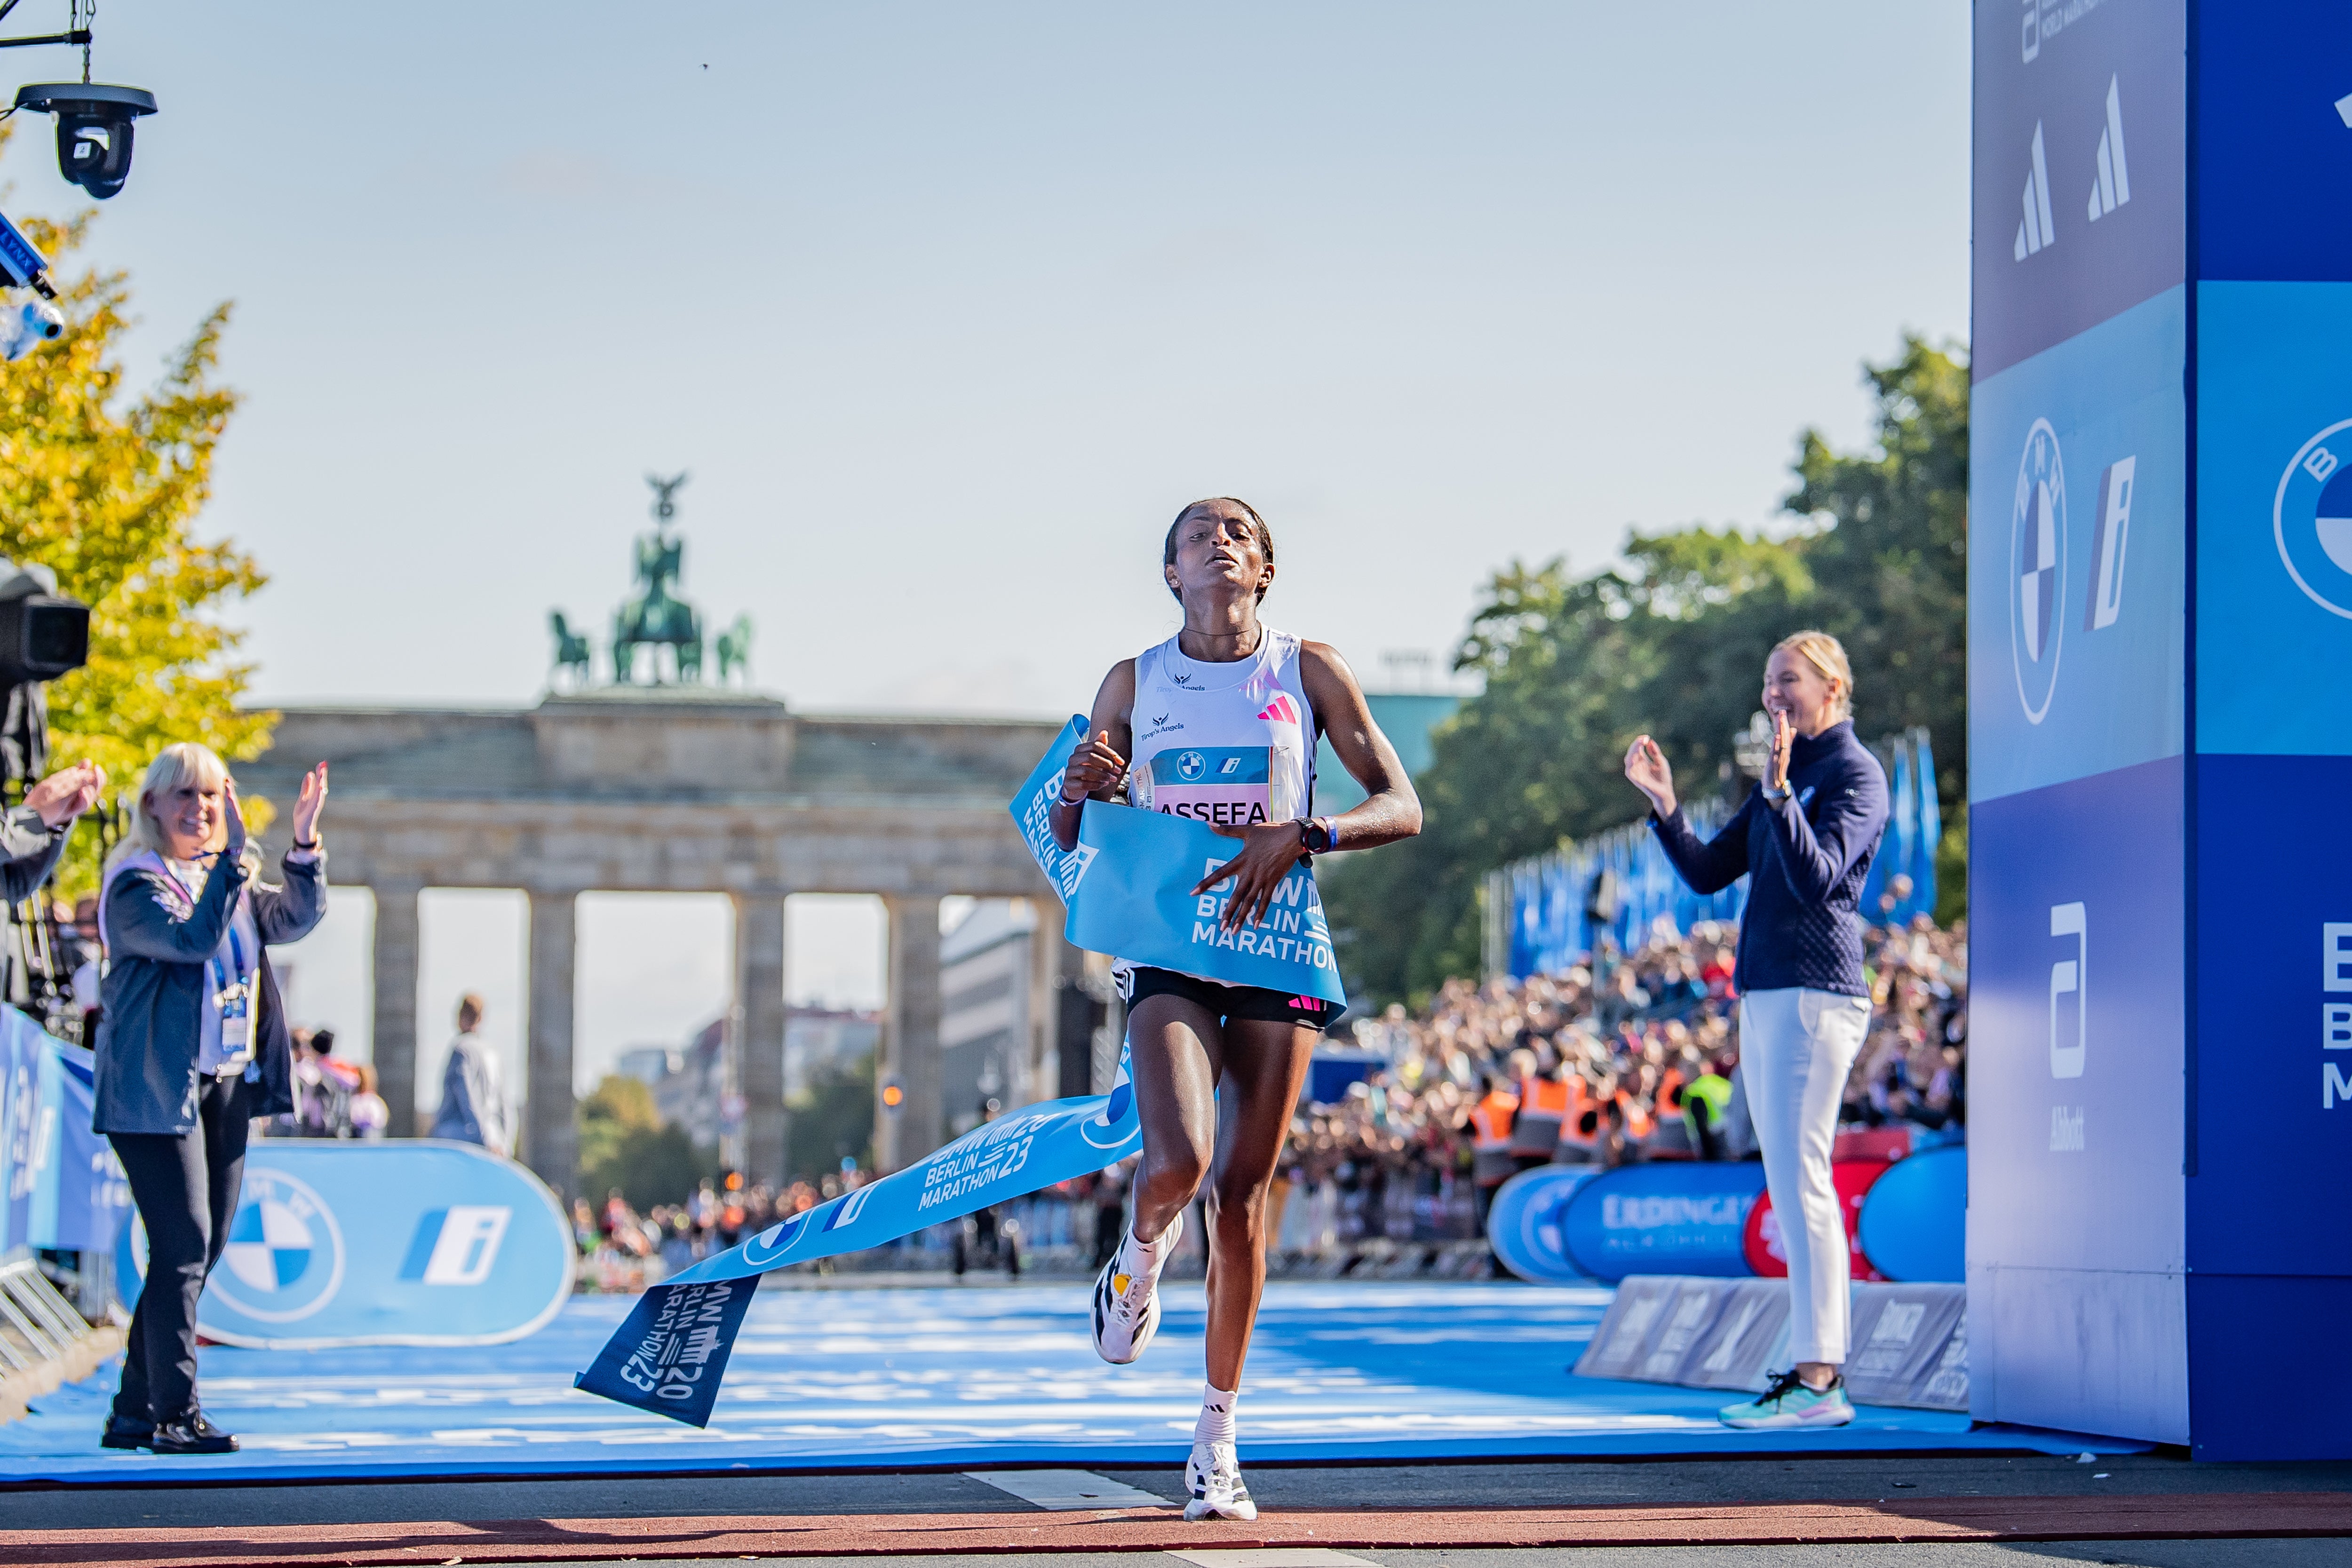 Tigsit Assefa smashed the women’s marathon record in Berlin